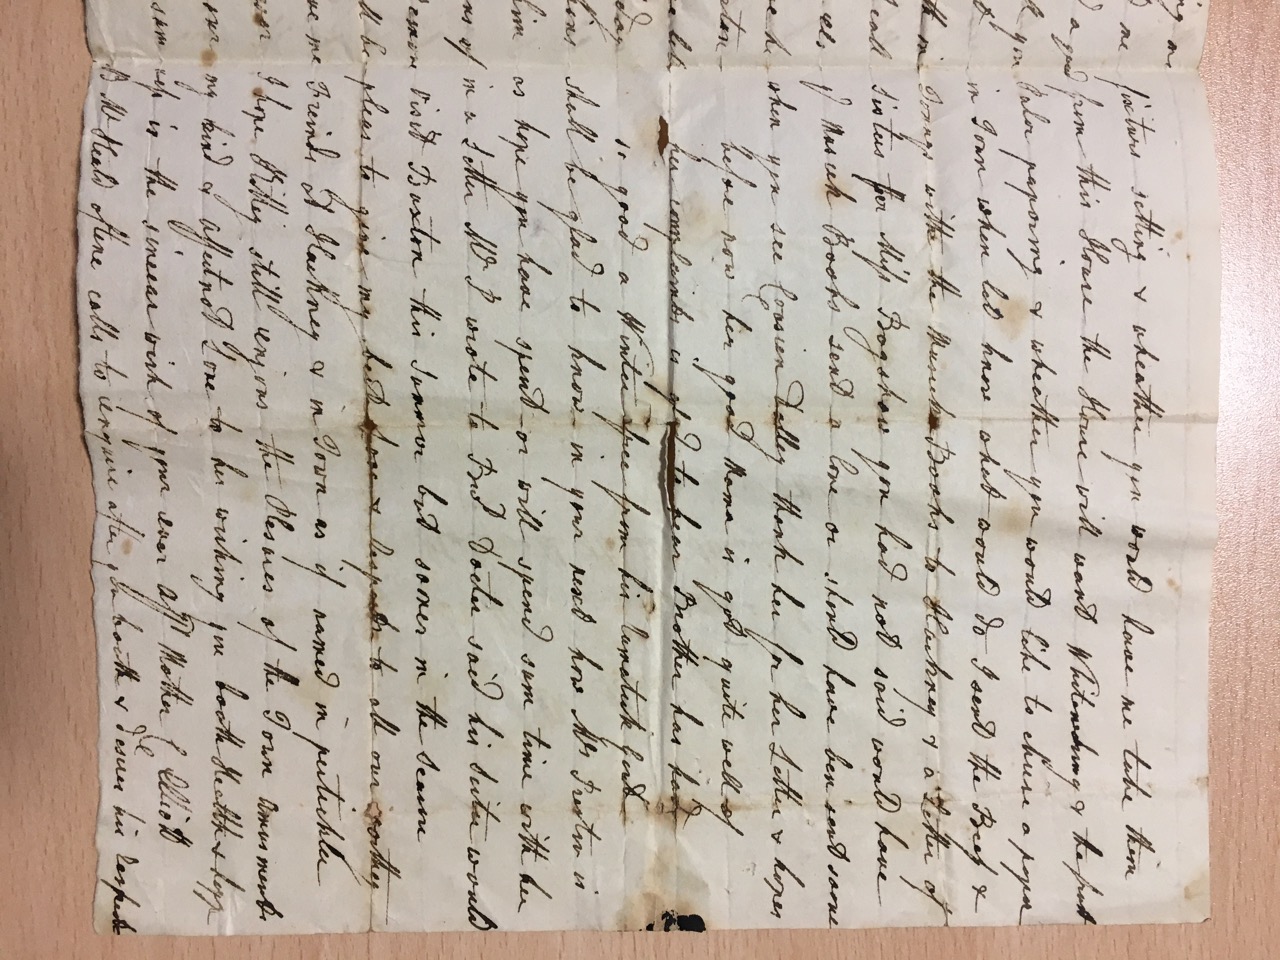 Image #3 of letter: Catherine Elliott to Ann Hare, 18 April 1790